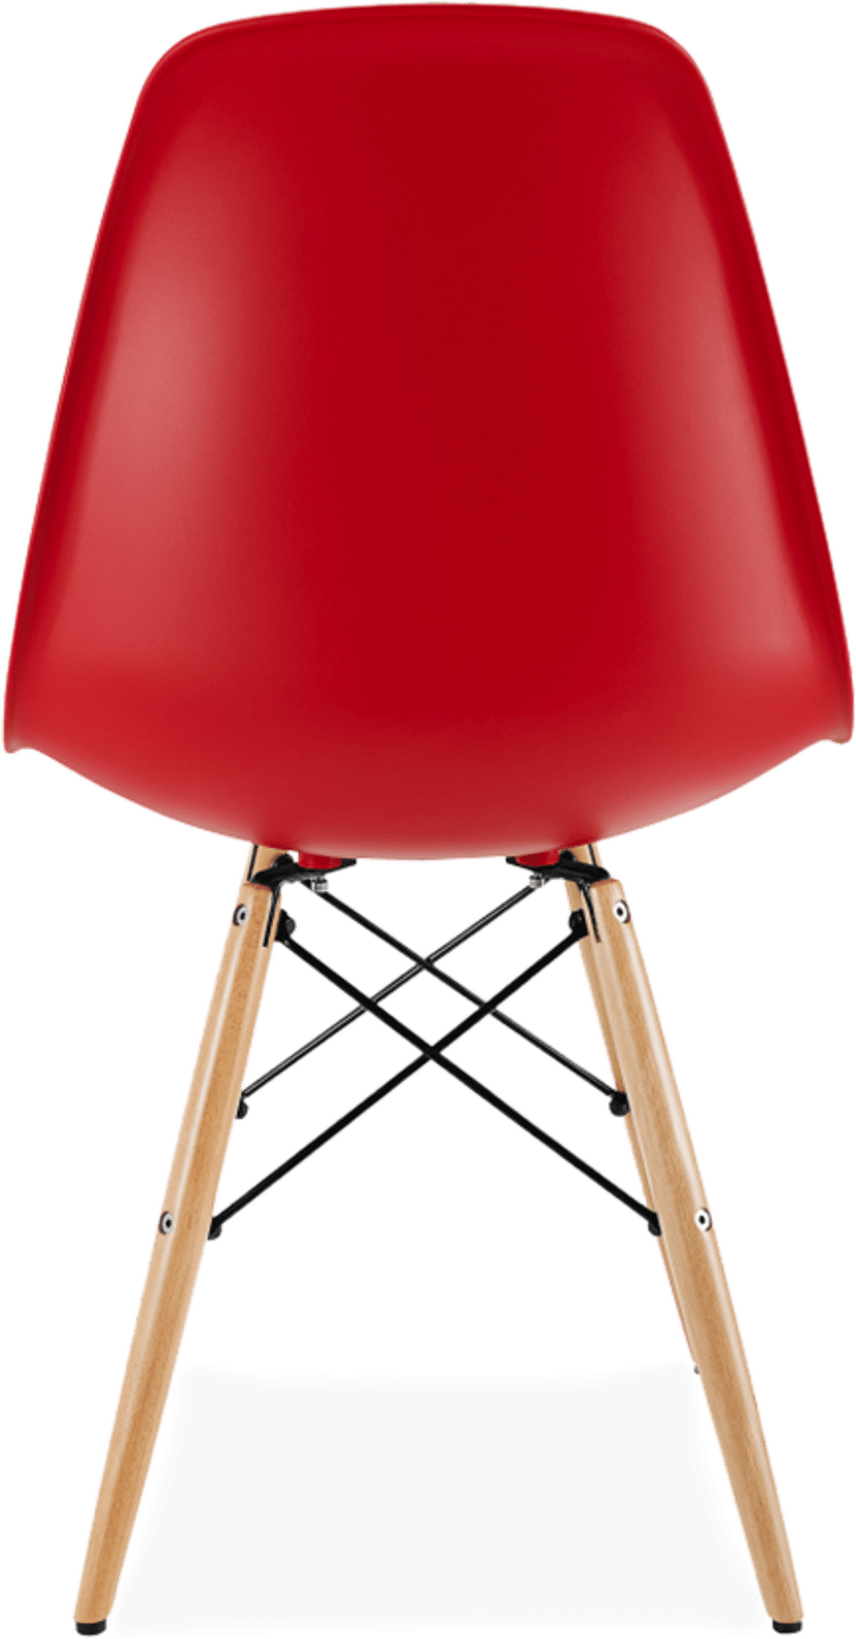 DSW-stoel Red/Light Wood image.